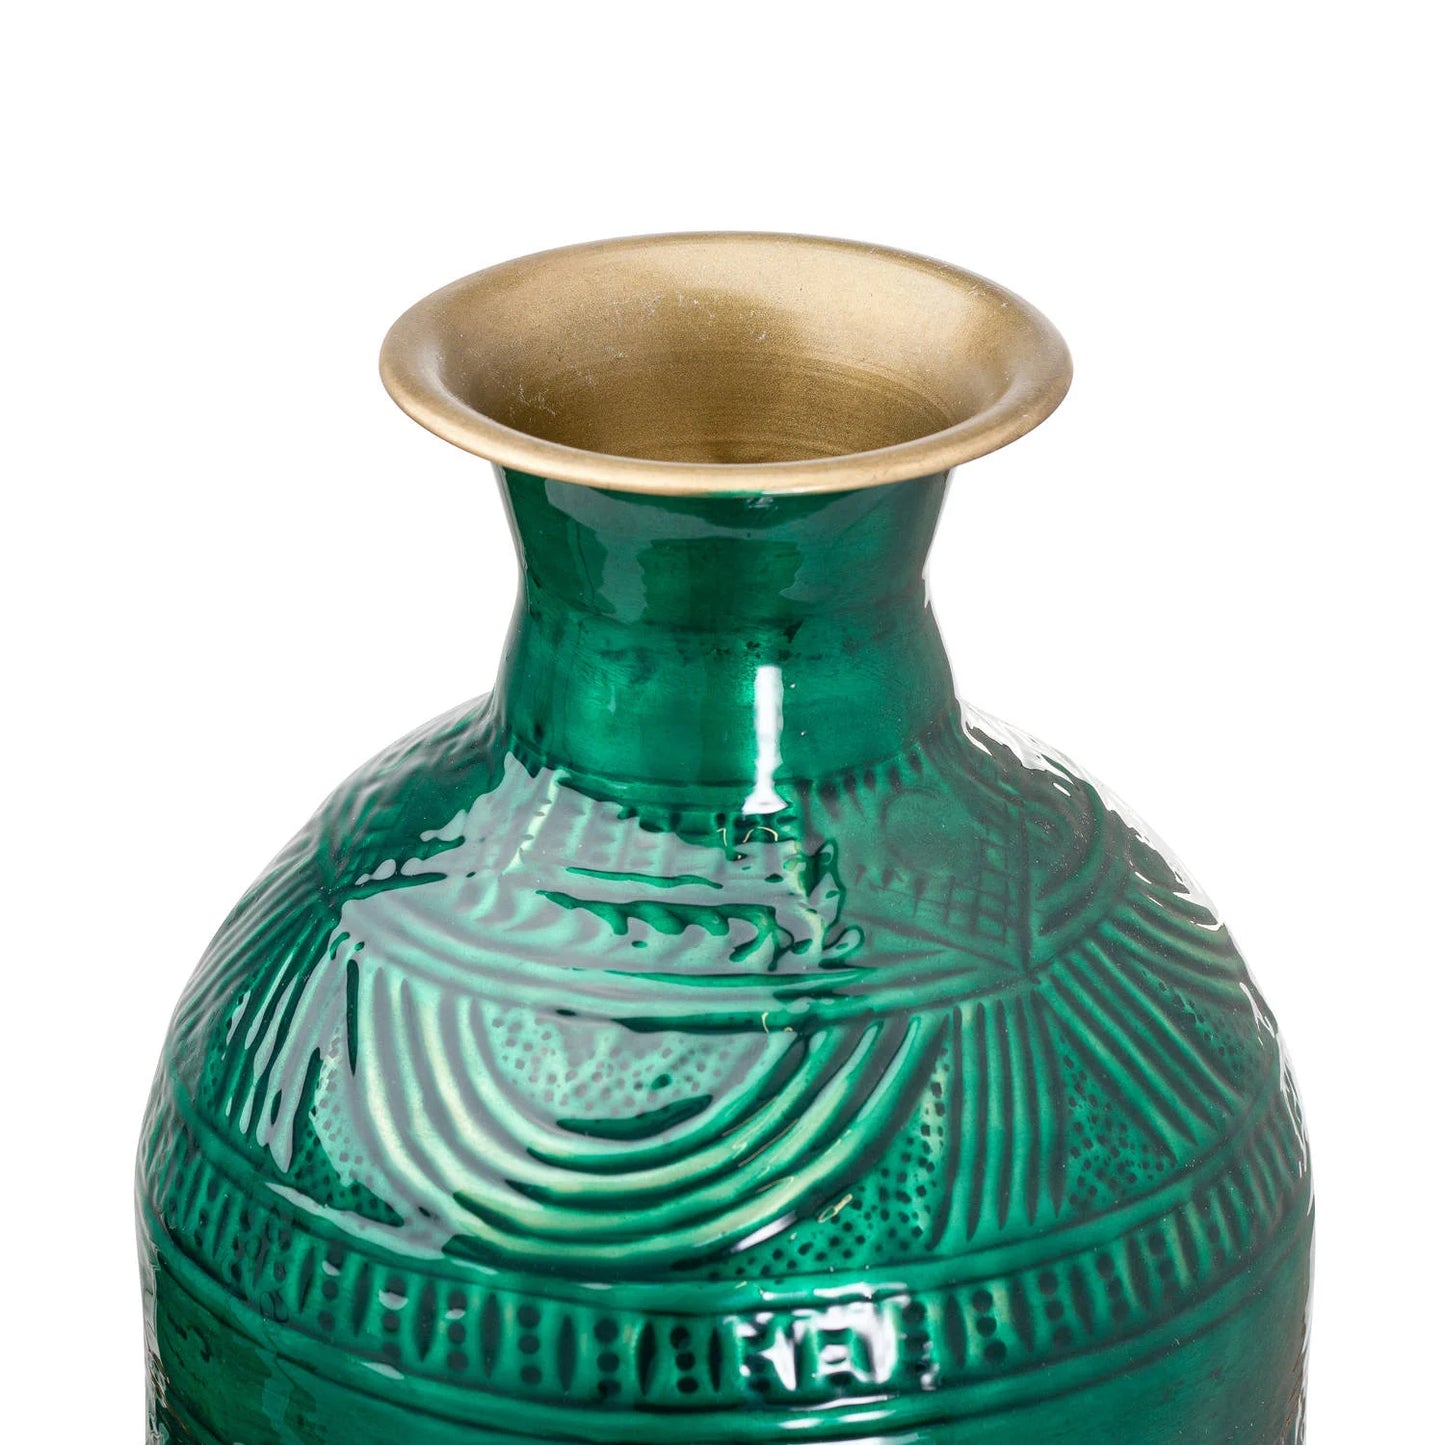 Aztec dipped lebes vase